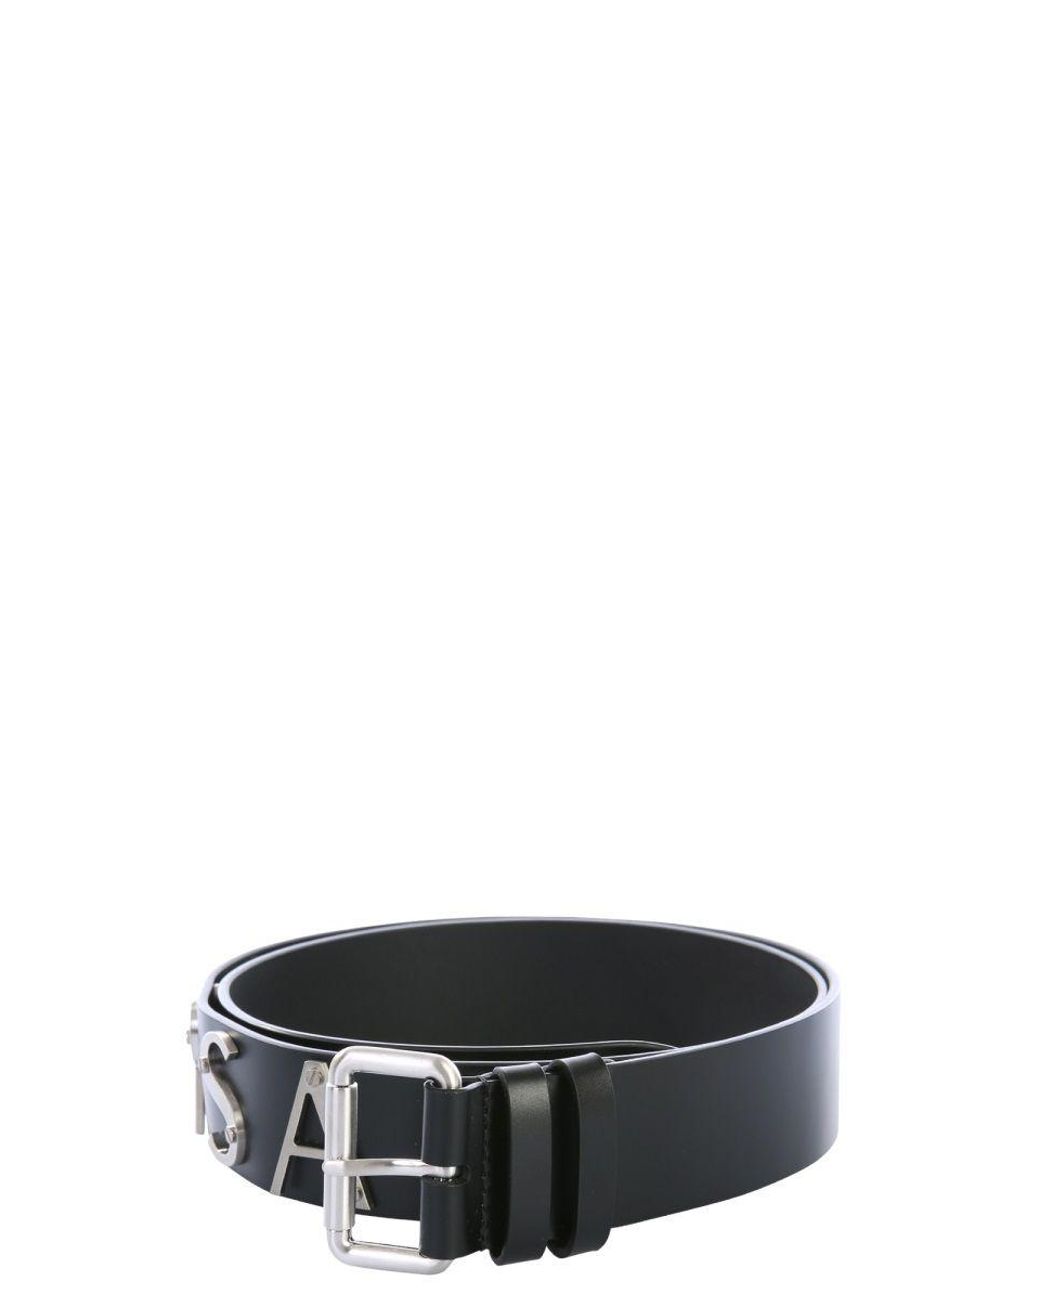 Versace Leather Belt in Black for Men - Lyst